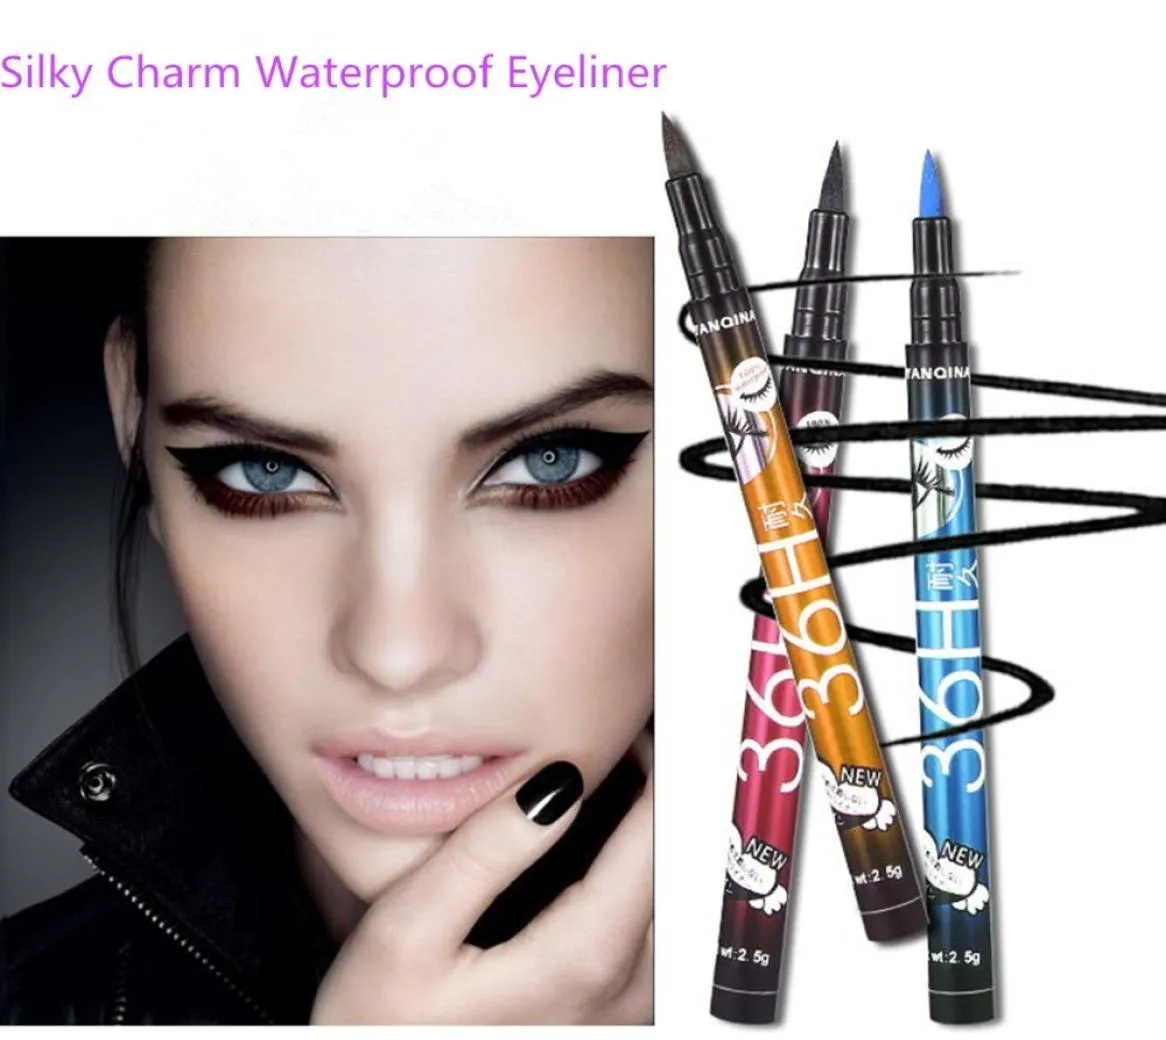 36H Waterproof Black Eyeliner YANQINA Makeup Liquid Make Up Beauty Comestics Eye Liner Pencil Brand New High Quality8029839